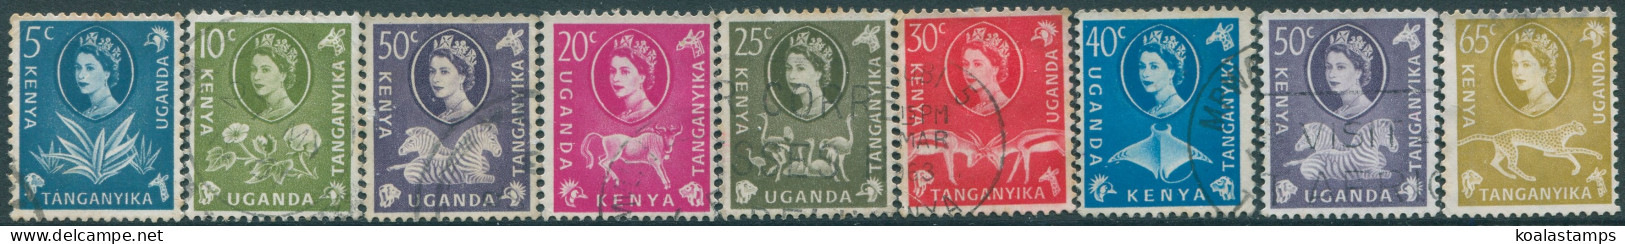 Kenya Uganda And Tanganyika 1960 SG183-191 QEII Wildlife And Plants (9) FU (amd) - Kenya, Uganda & Tanganyika